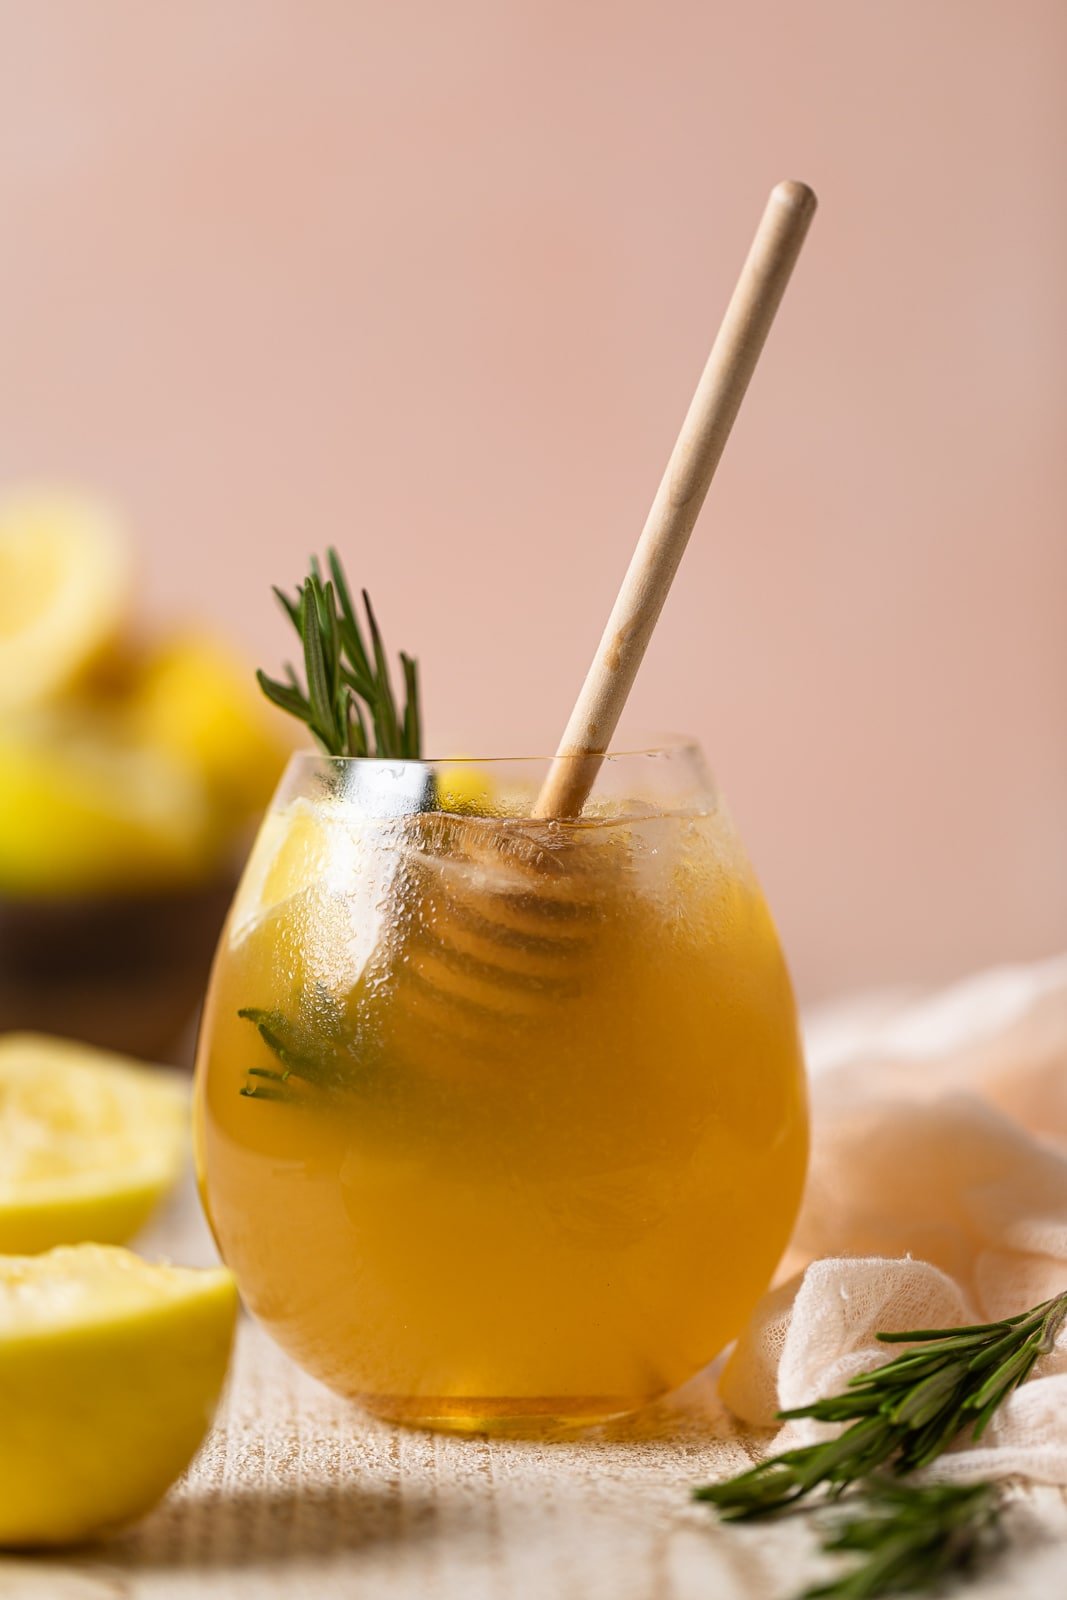 Glass of Apple Cider Vinegar Detox Lemonade with rosemary sprigs and a honey dipper